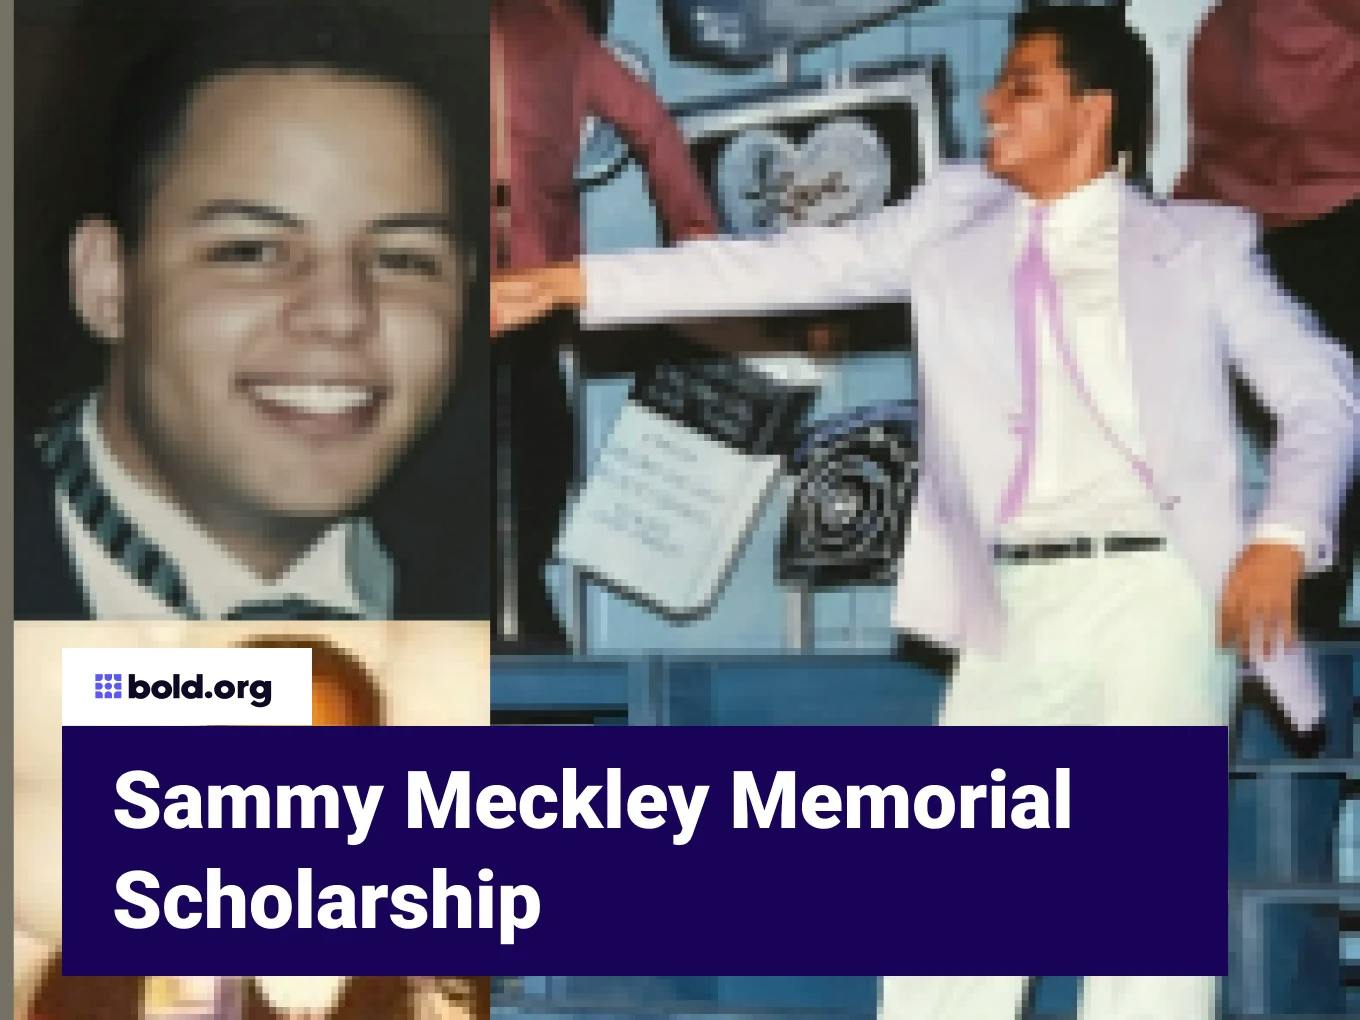 Sammy Meckley Memorial Scholarship